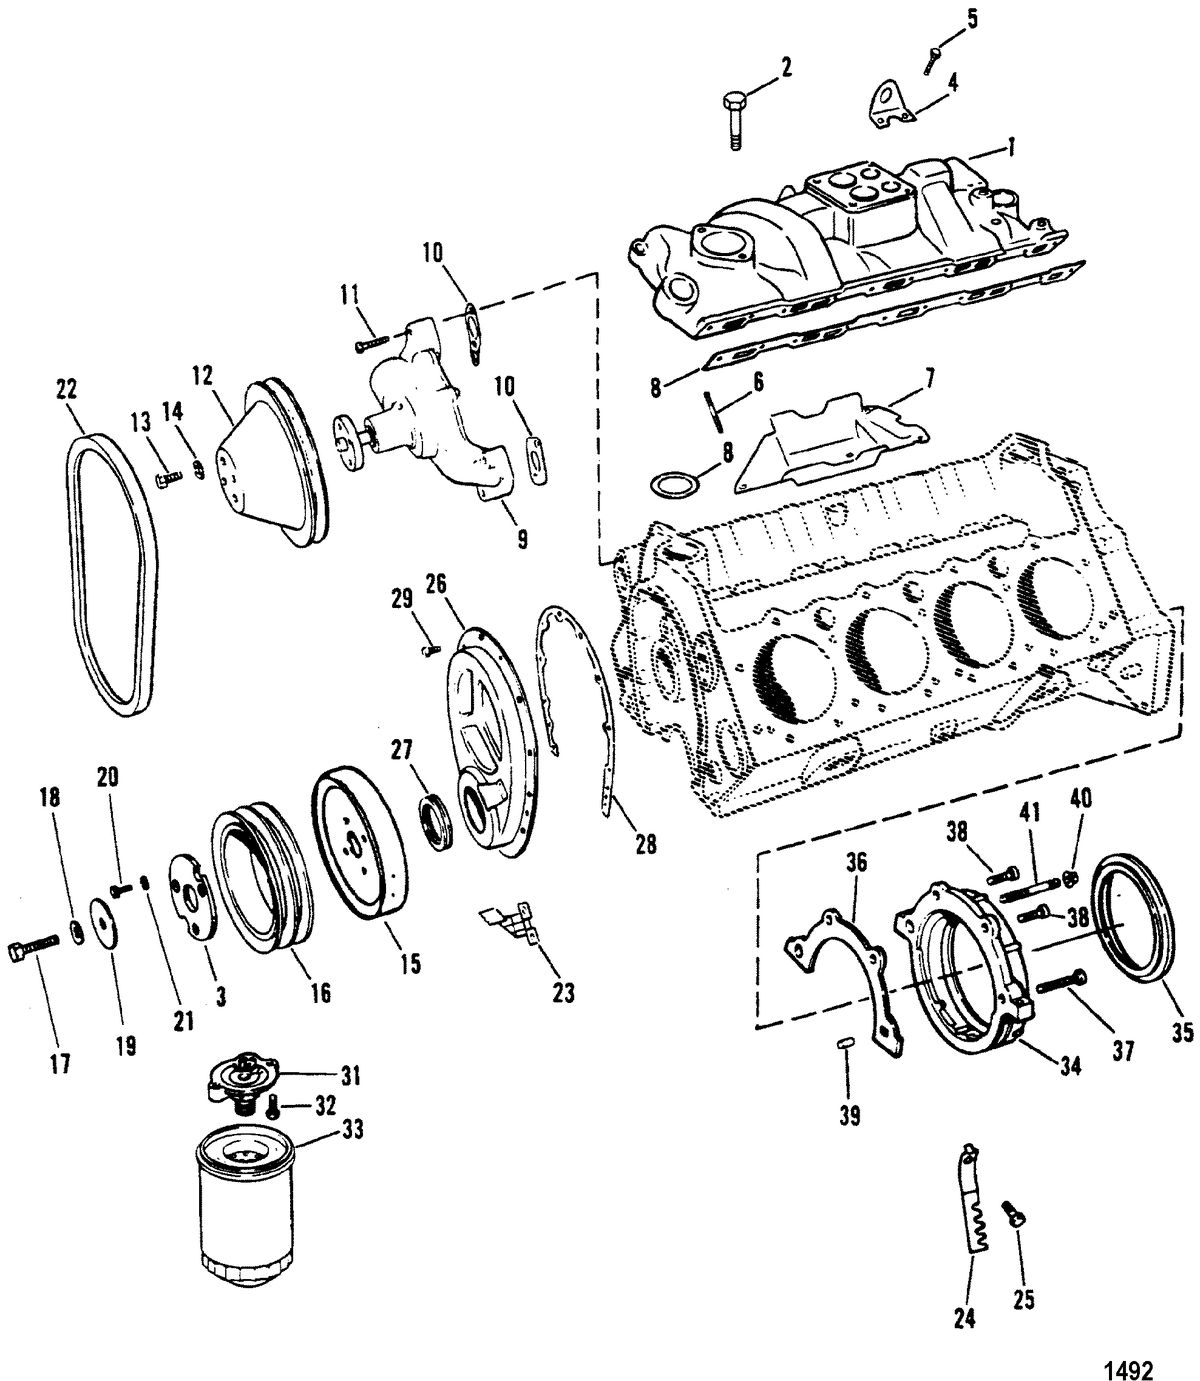 MERCRUISER 5.7L COMPETITION SKI ENGINE Intake Manifold & Front Cover(Design I) Stamped